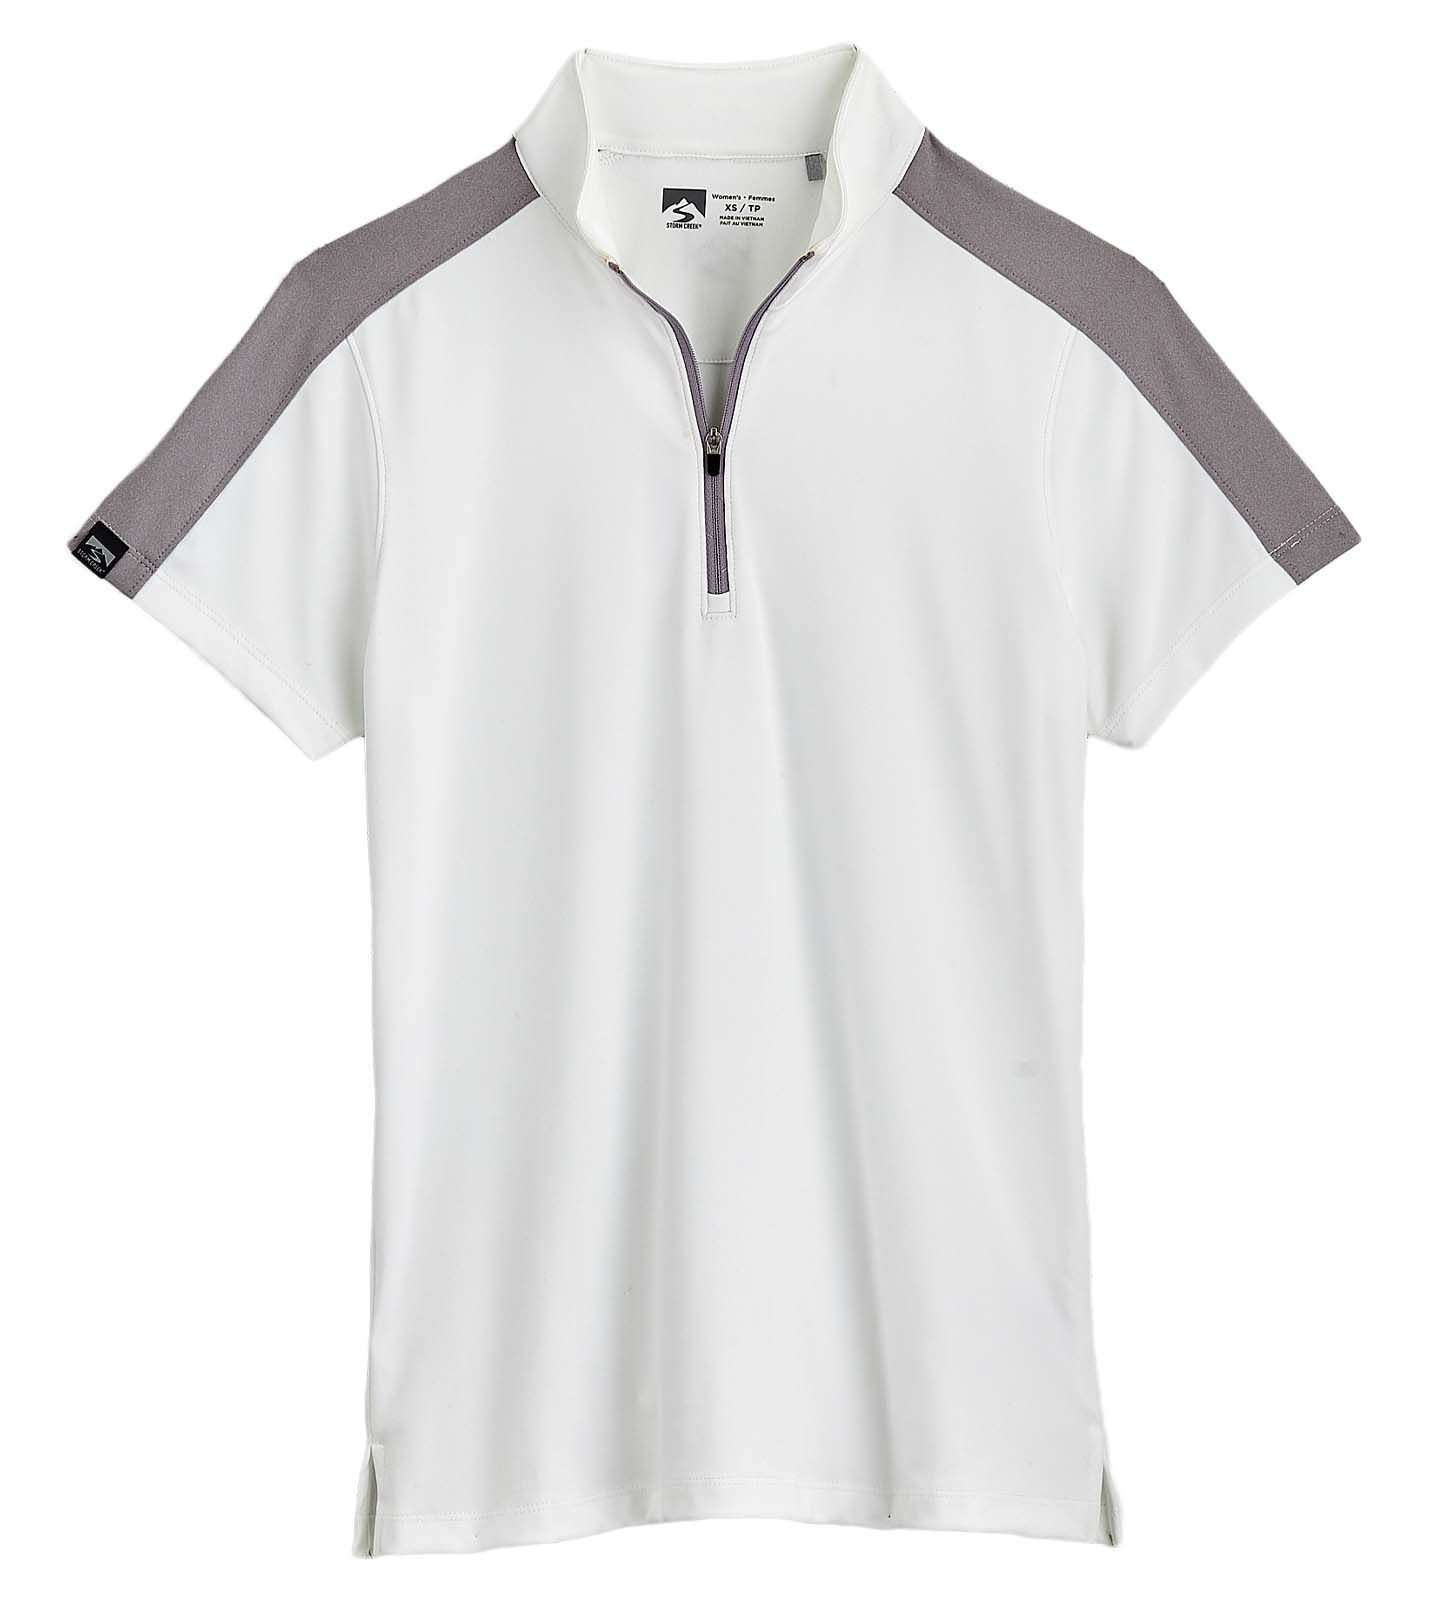 Storm Creek Activator Short-Sleeve Polo Shirt for Ladies - Dark Heather Gray/Black - White/Light Heather Gray - 2XL